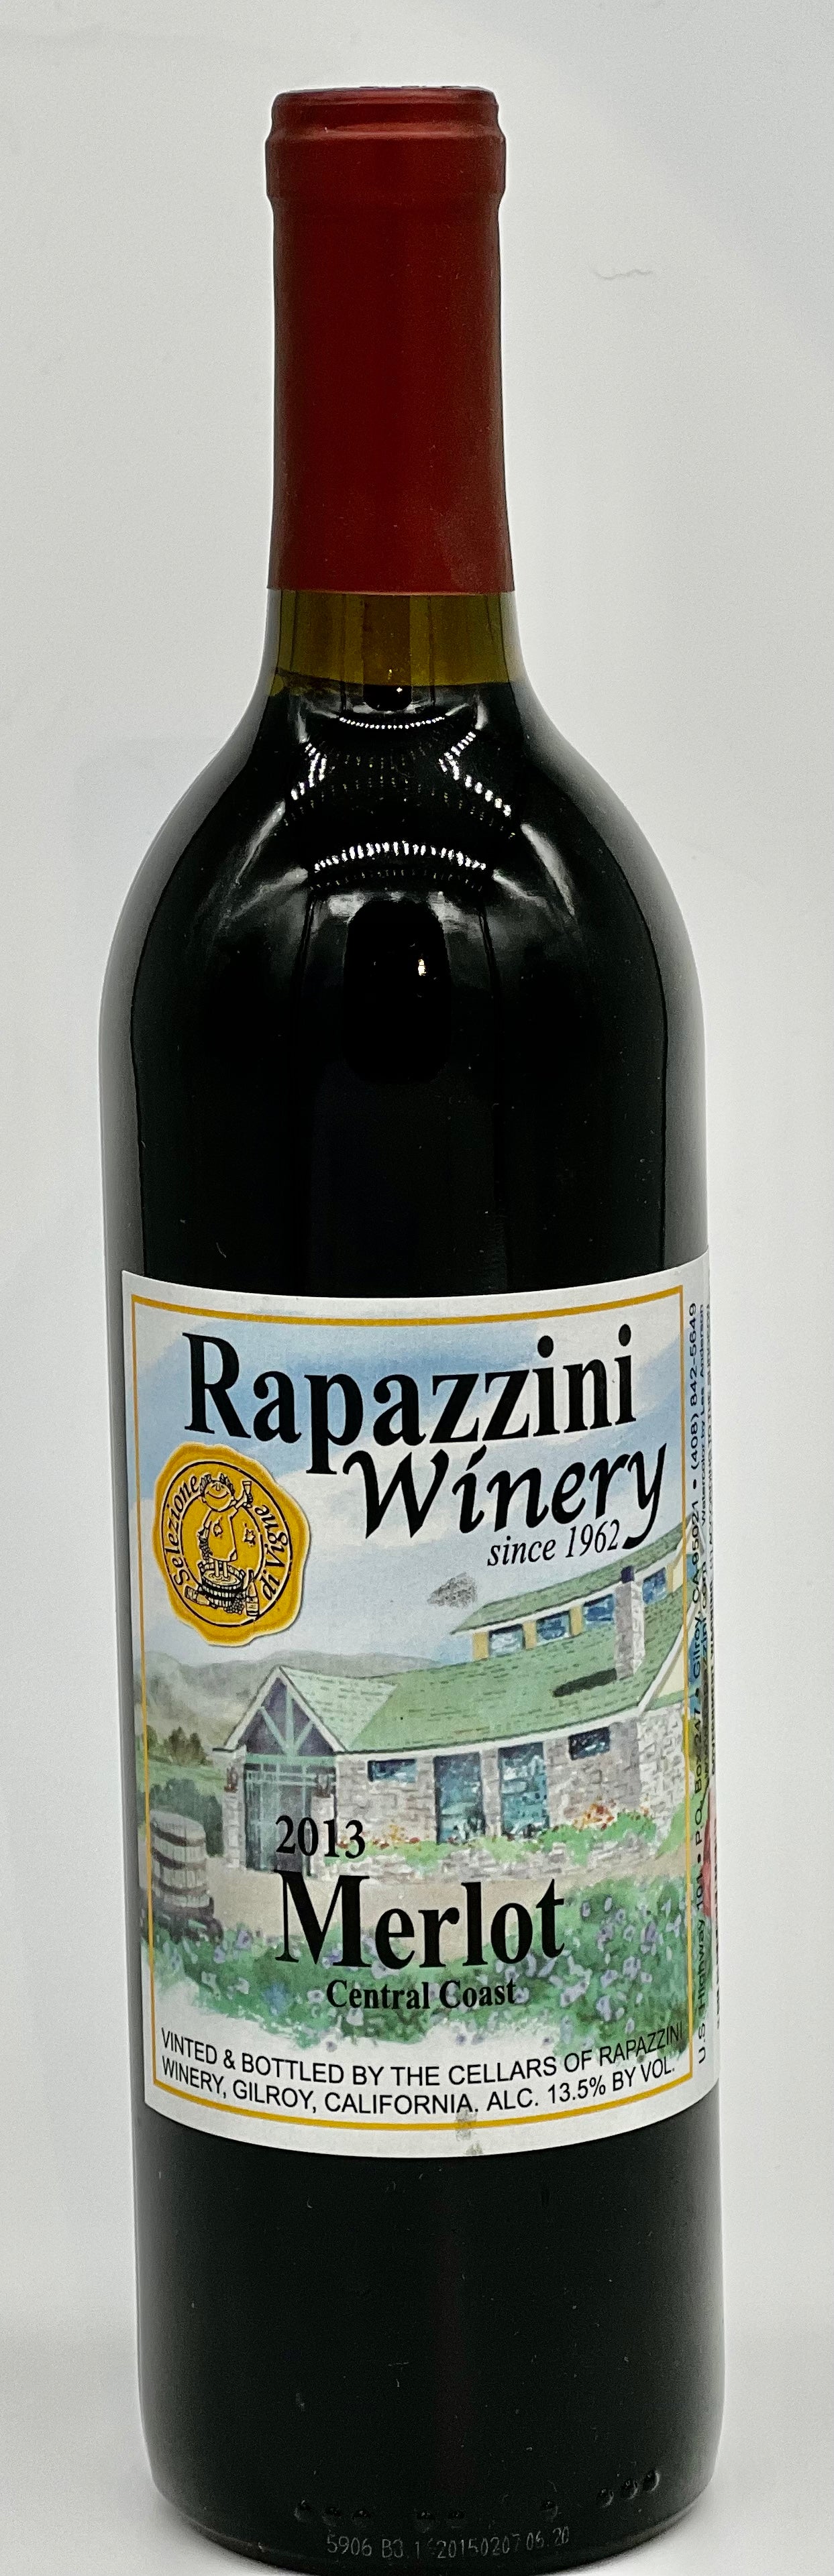 Merlot 2013 Central Coast California Rapazzini.Wine 750 ml 25 oz 13.5%alcohol $34